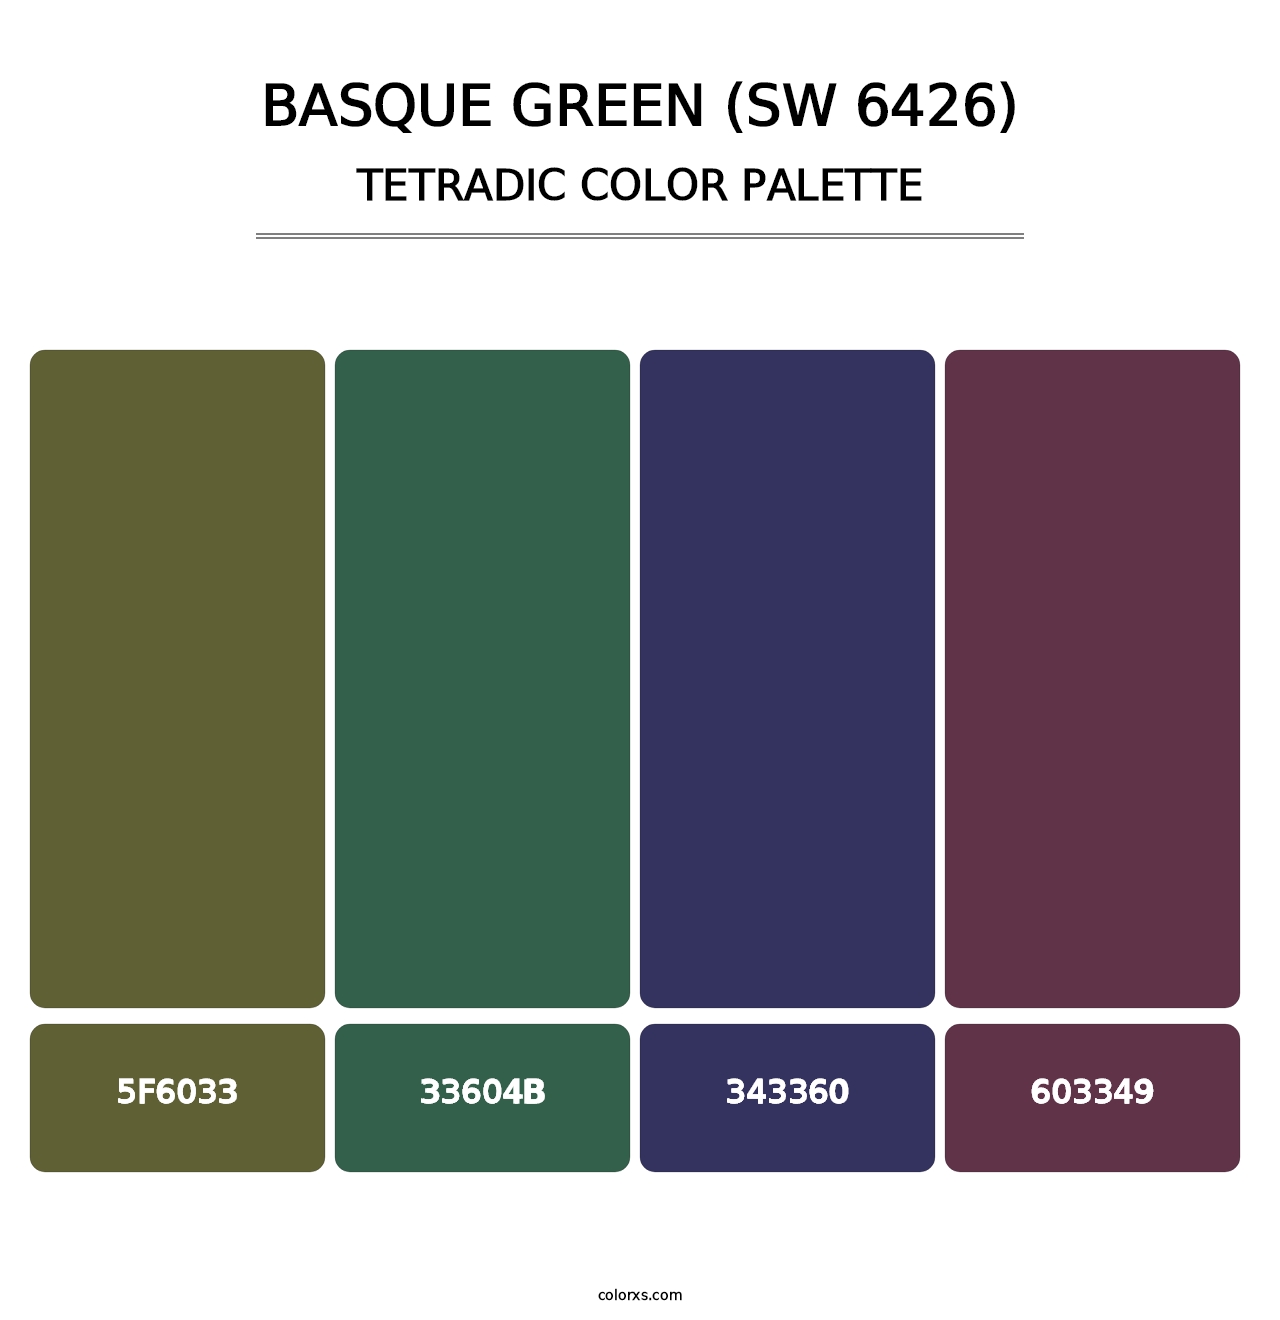 Basque Green (SW 6426) - Tetradic Color Palette